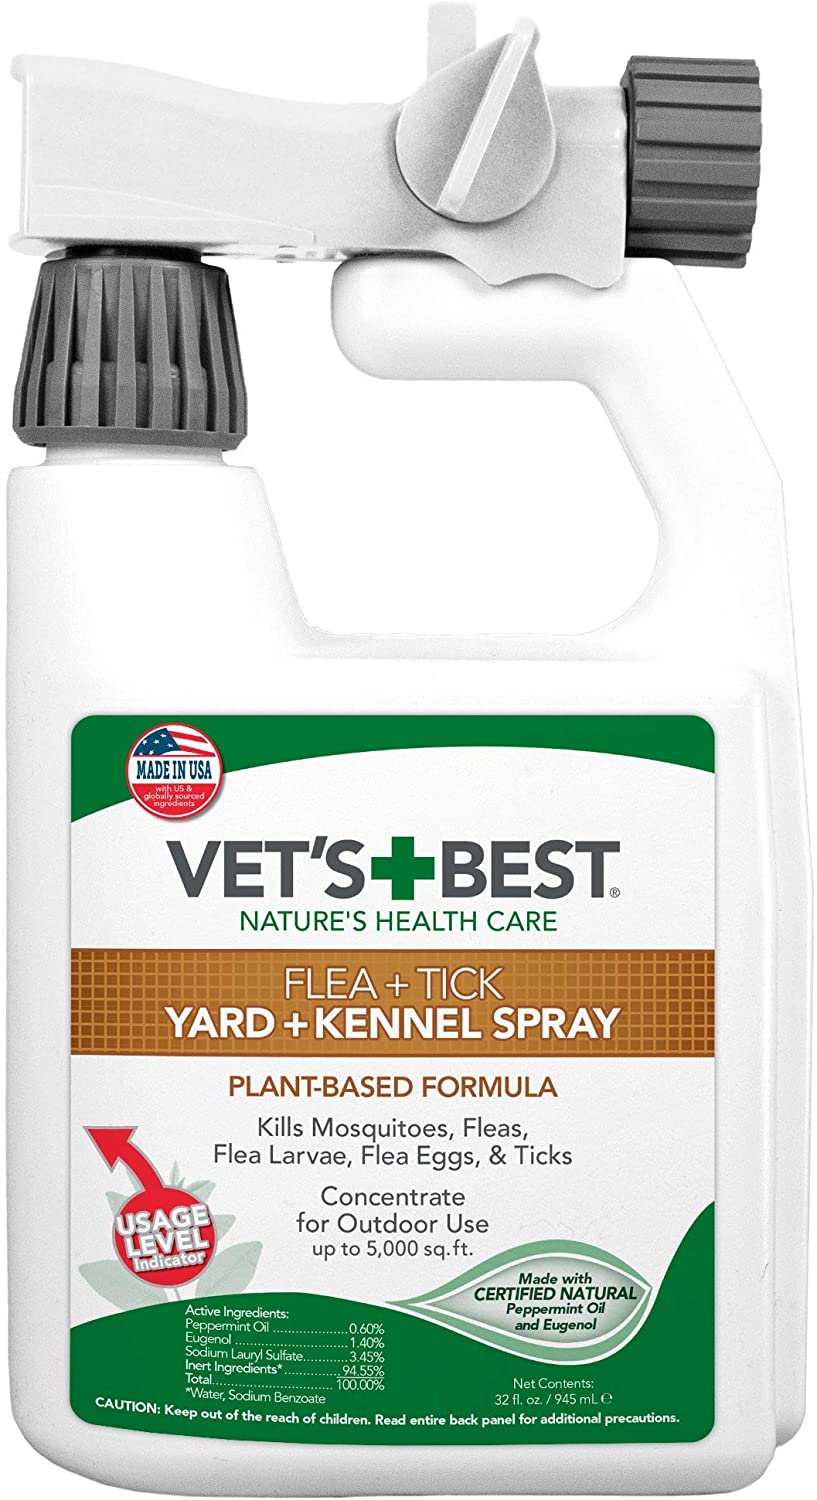 Vet’s Best Pet Friendly Yard Spray